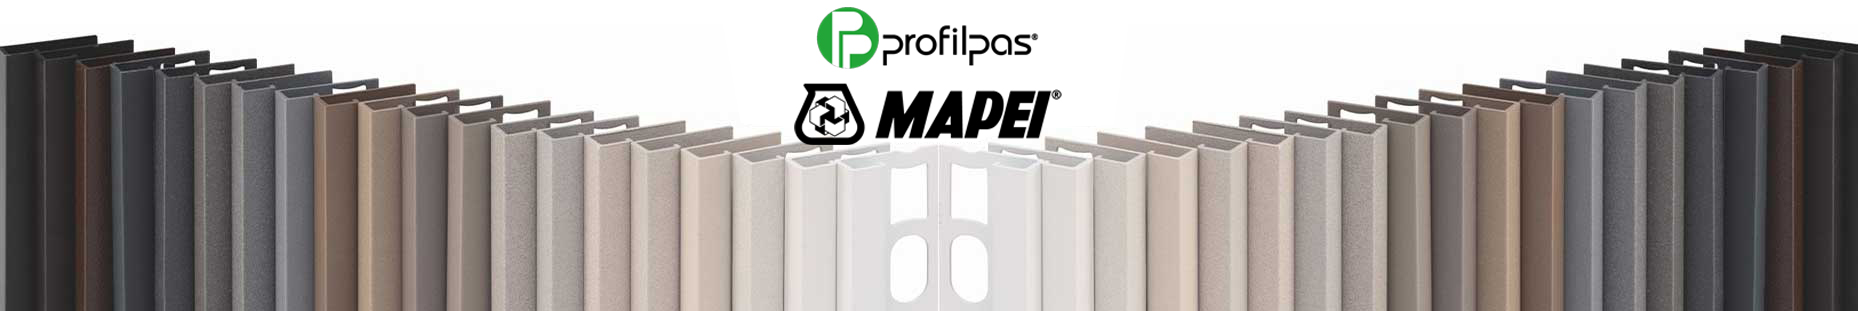 Profilpas Mapei Tiling Trim Profiles